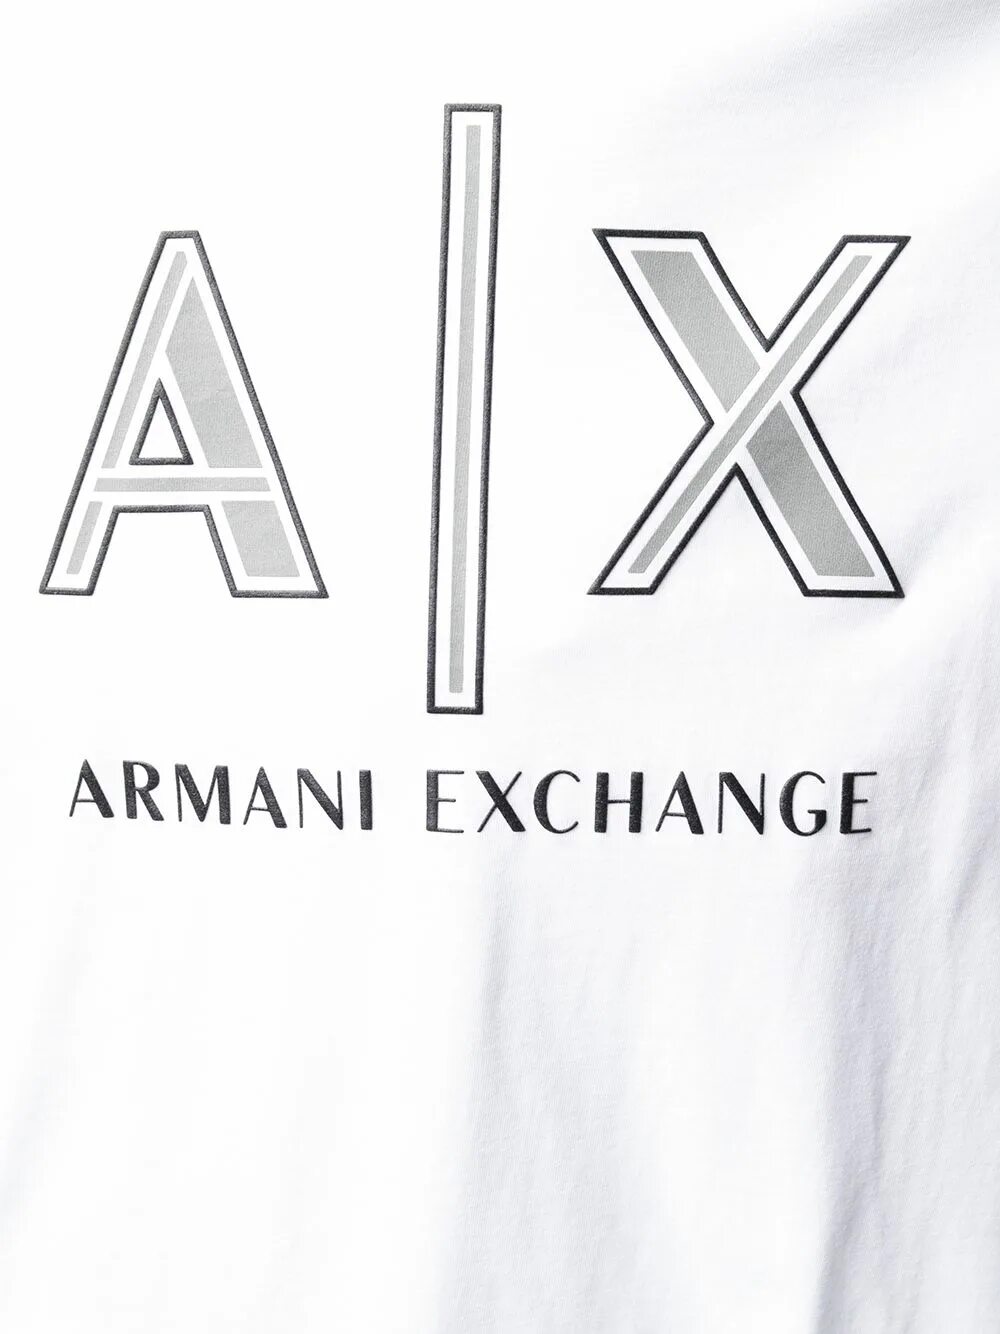 Armani Exchange logo нашивка. Бирка Армани эксчендж. Пакет Армани эксчендж. Армани эксчендж значок. Армани эксчендж интернет магазин